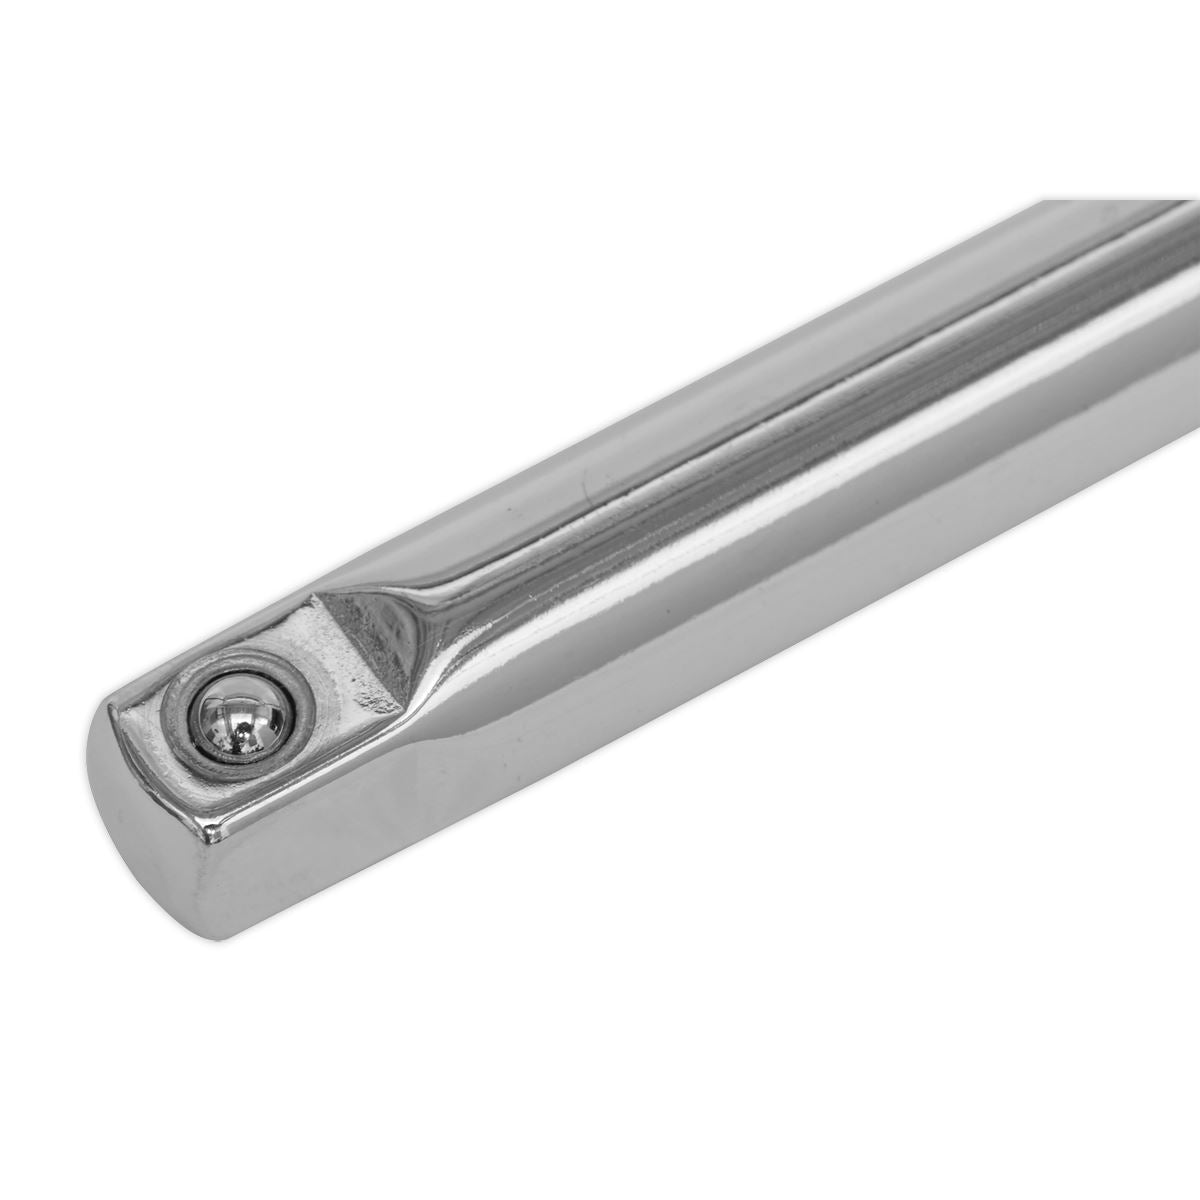 Sealey Premier Extension Bar Set 3pc 1/4"Sq Drive